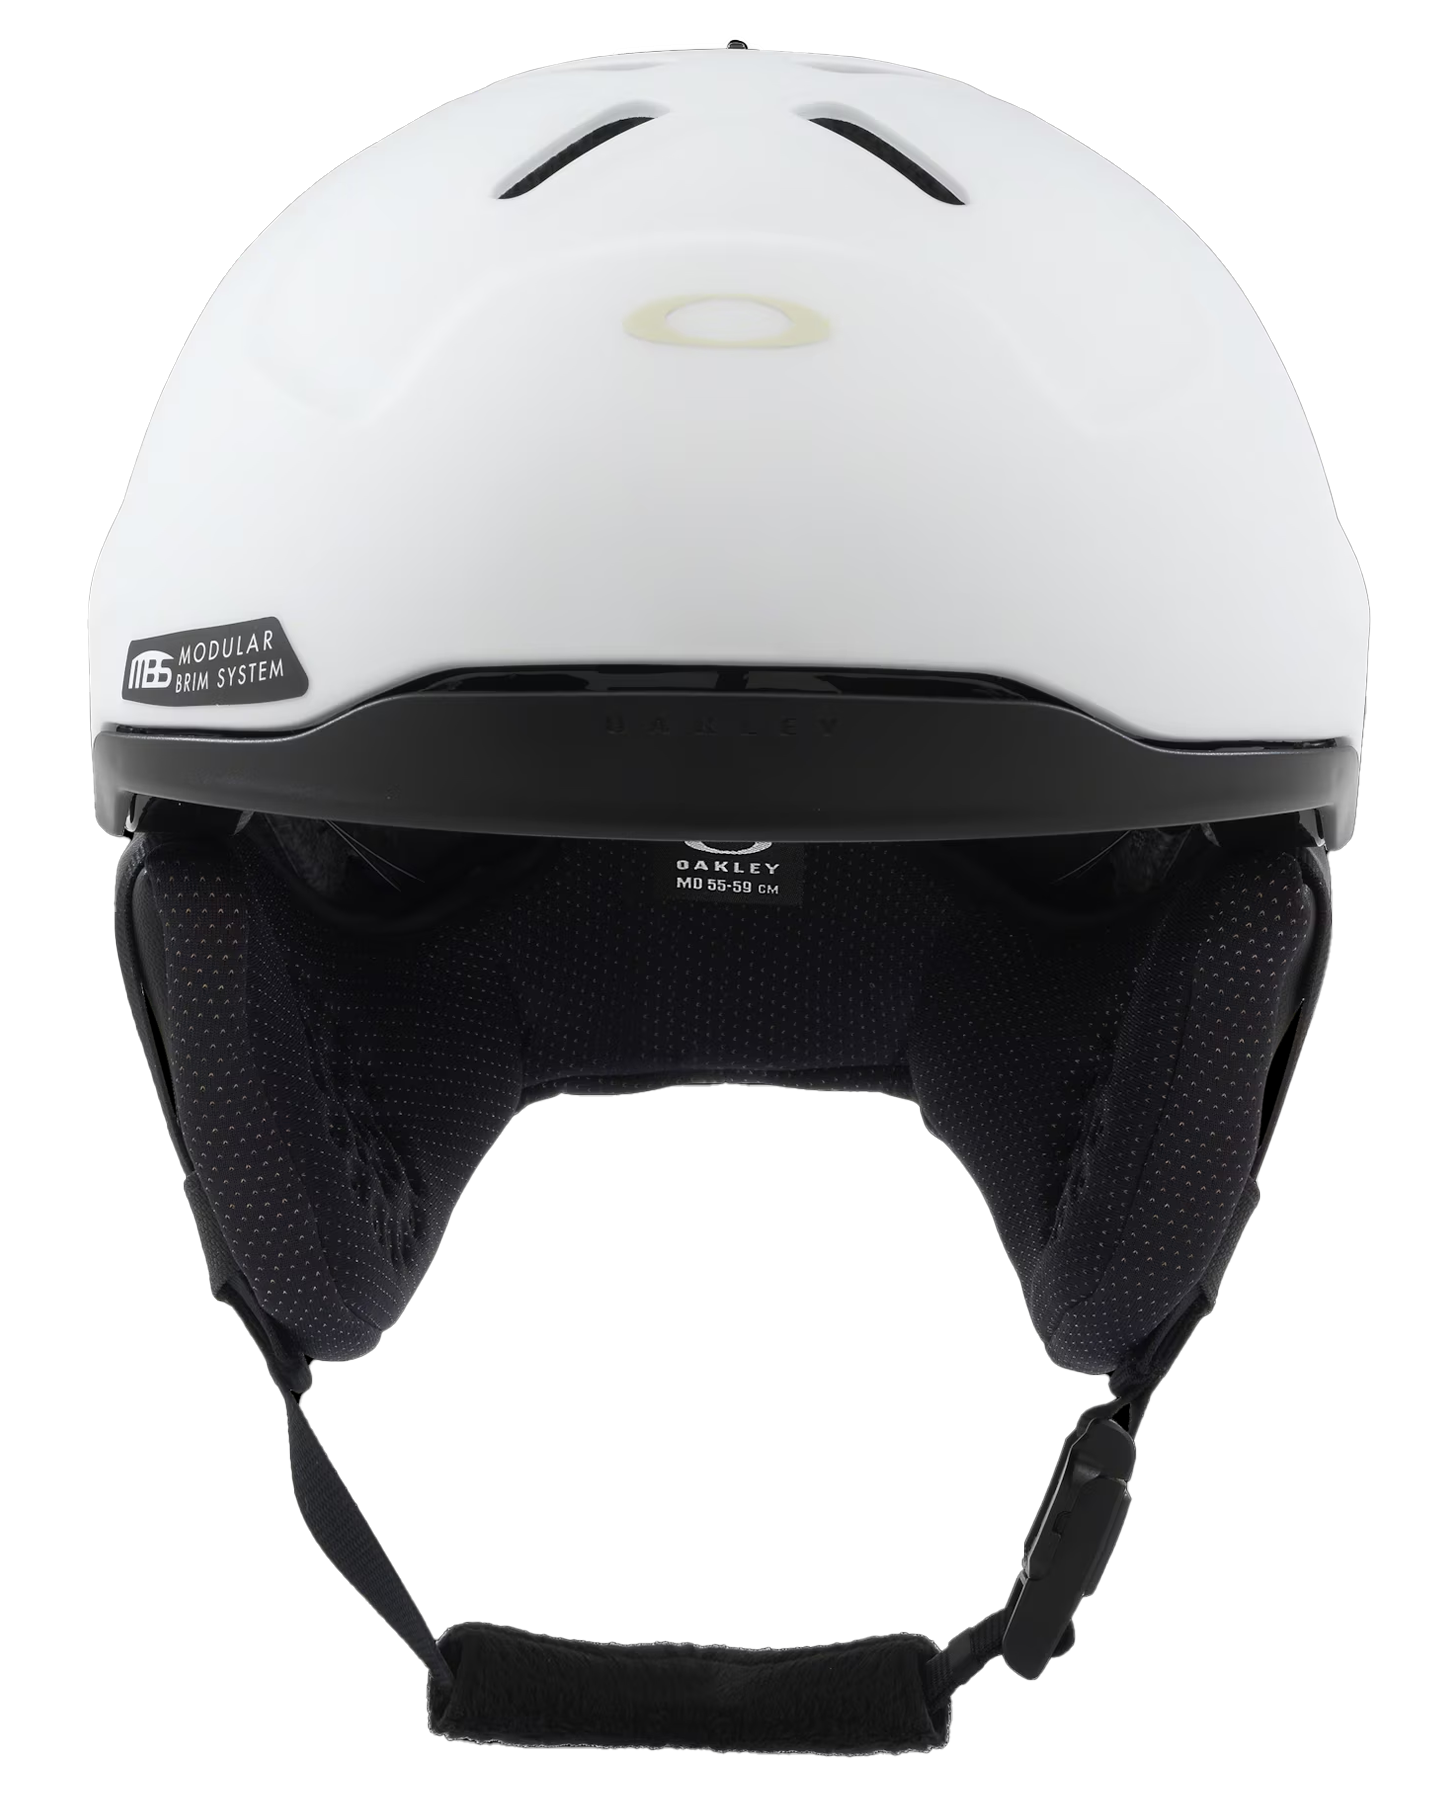 Oakley Mod3 Snow Helmet - White Men's Snow Helmets - SnowSkiersWarehouse